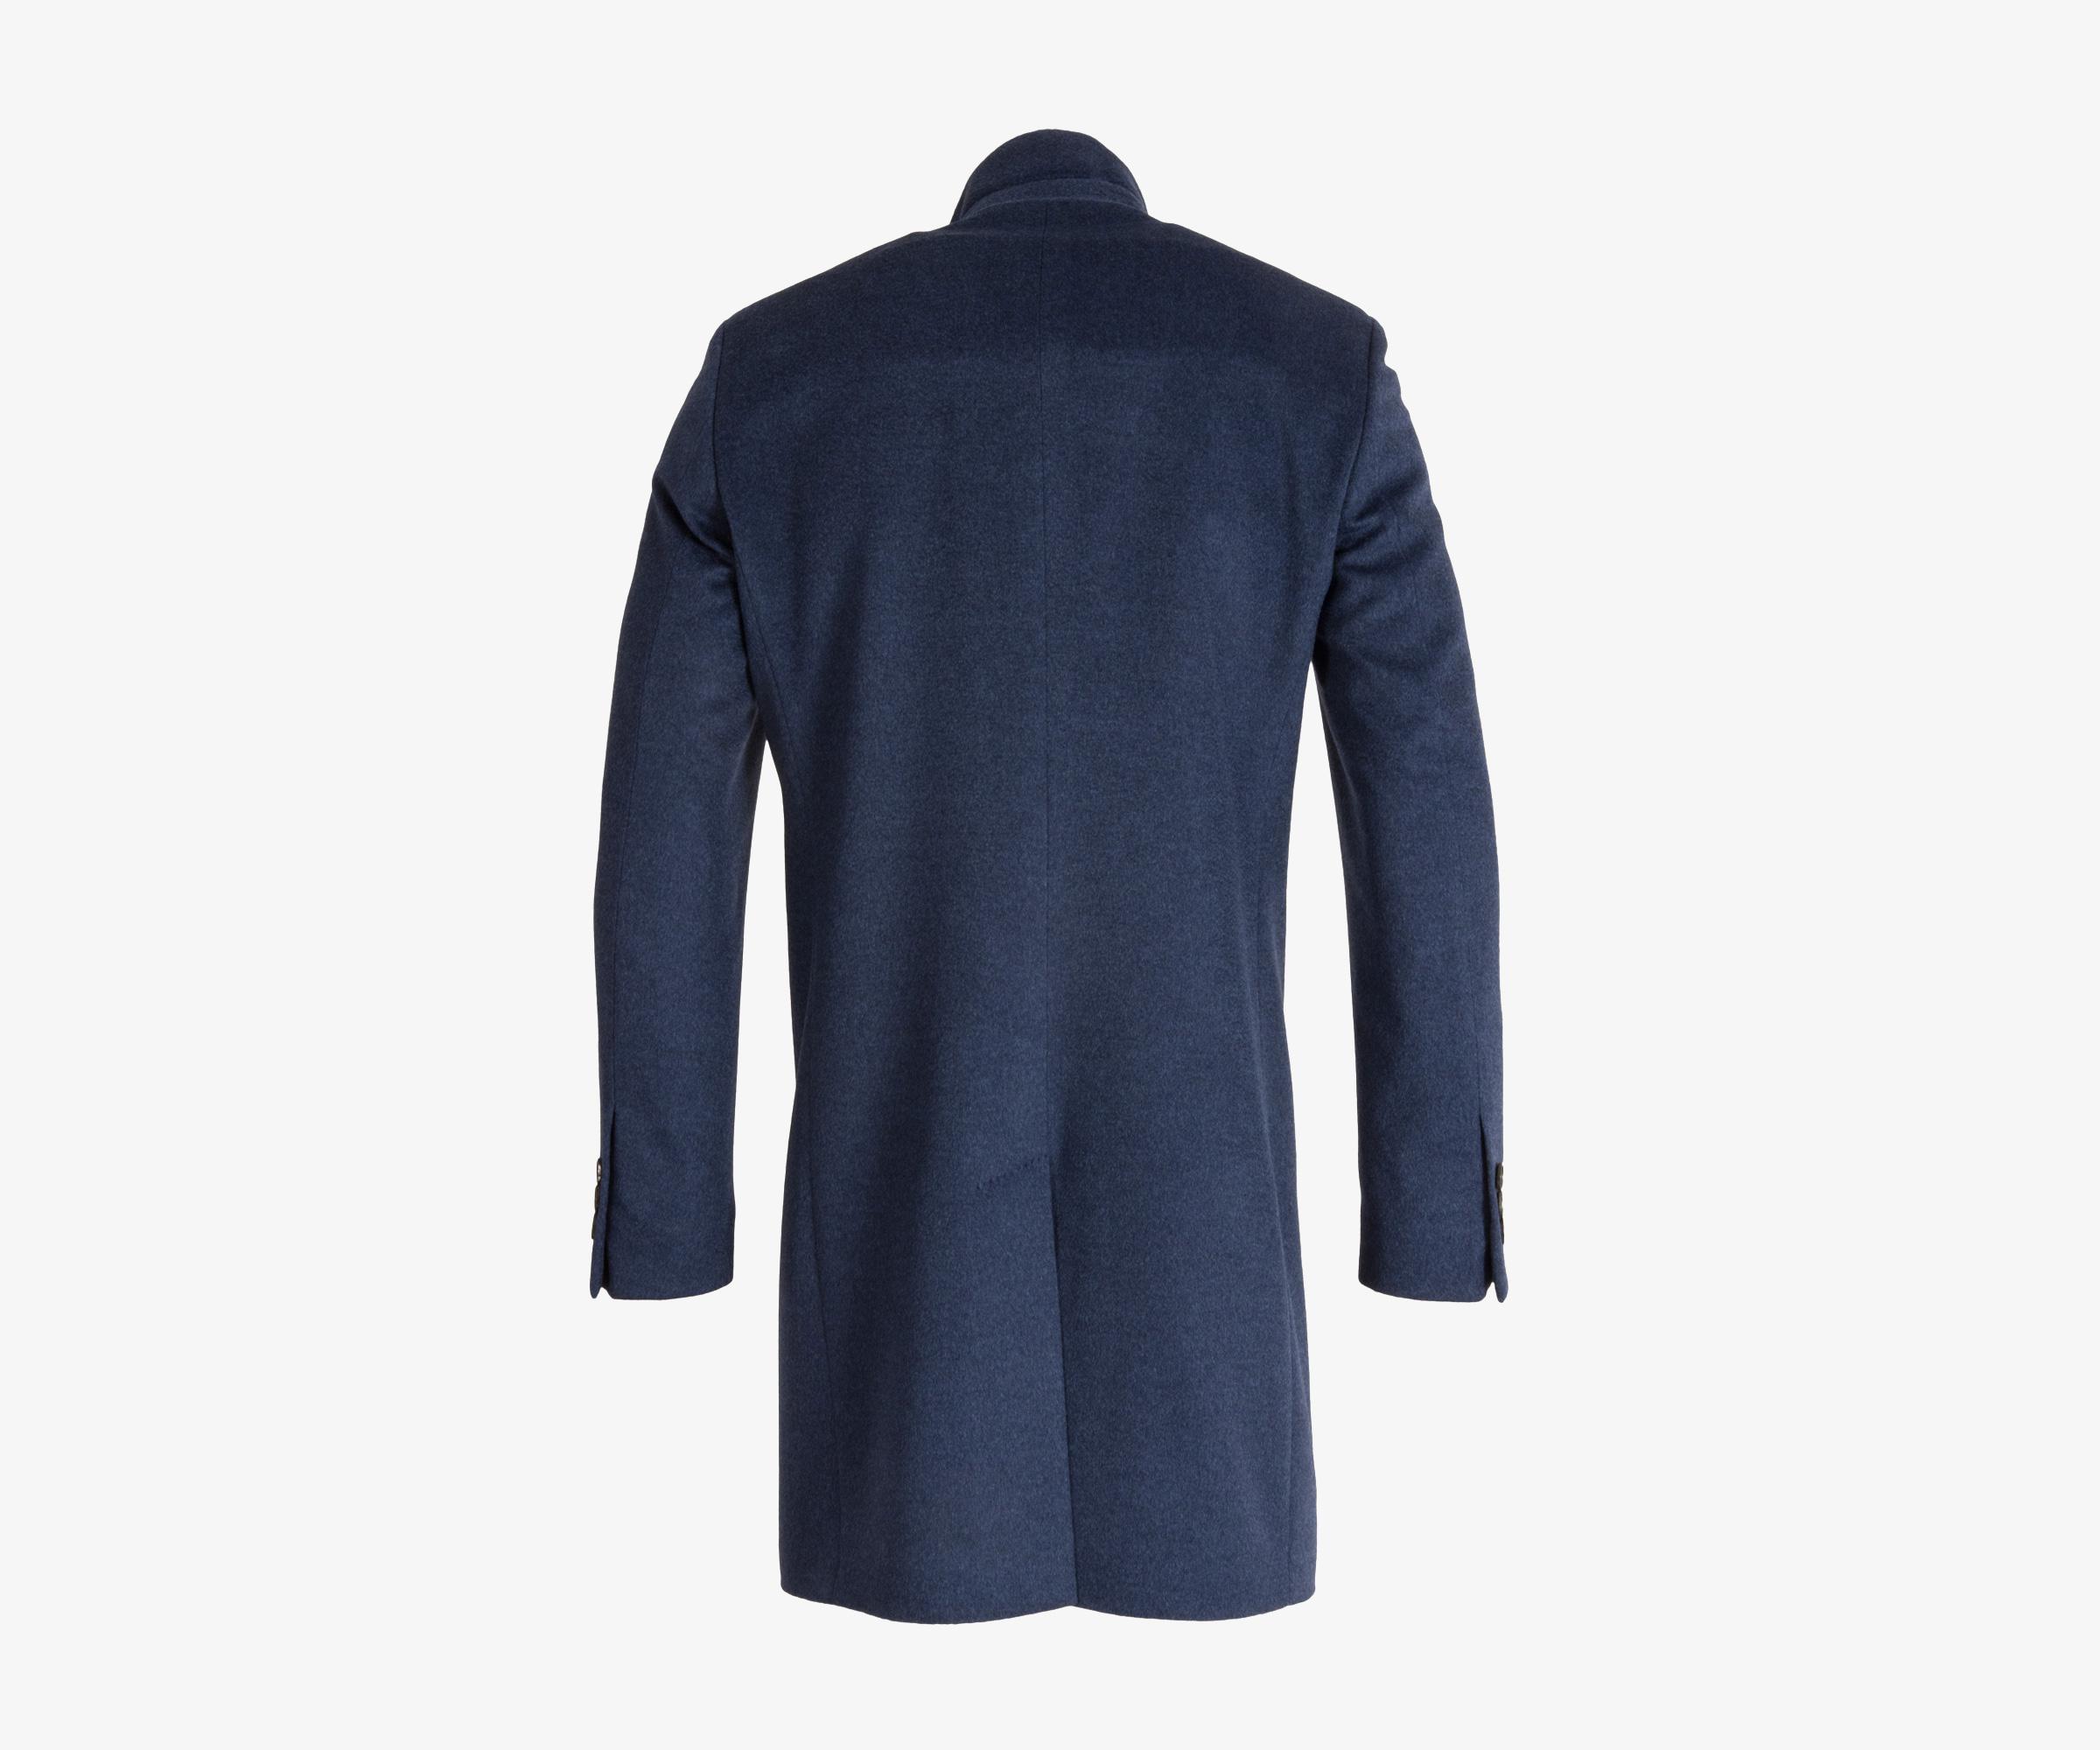 BOSS by HUGO BOSS 'nye' Luxury Cashmere & Wool Overcoat Winter Blue for Men  - Lyst